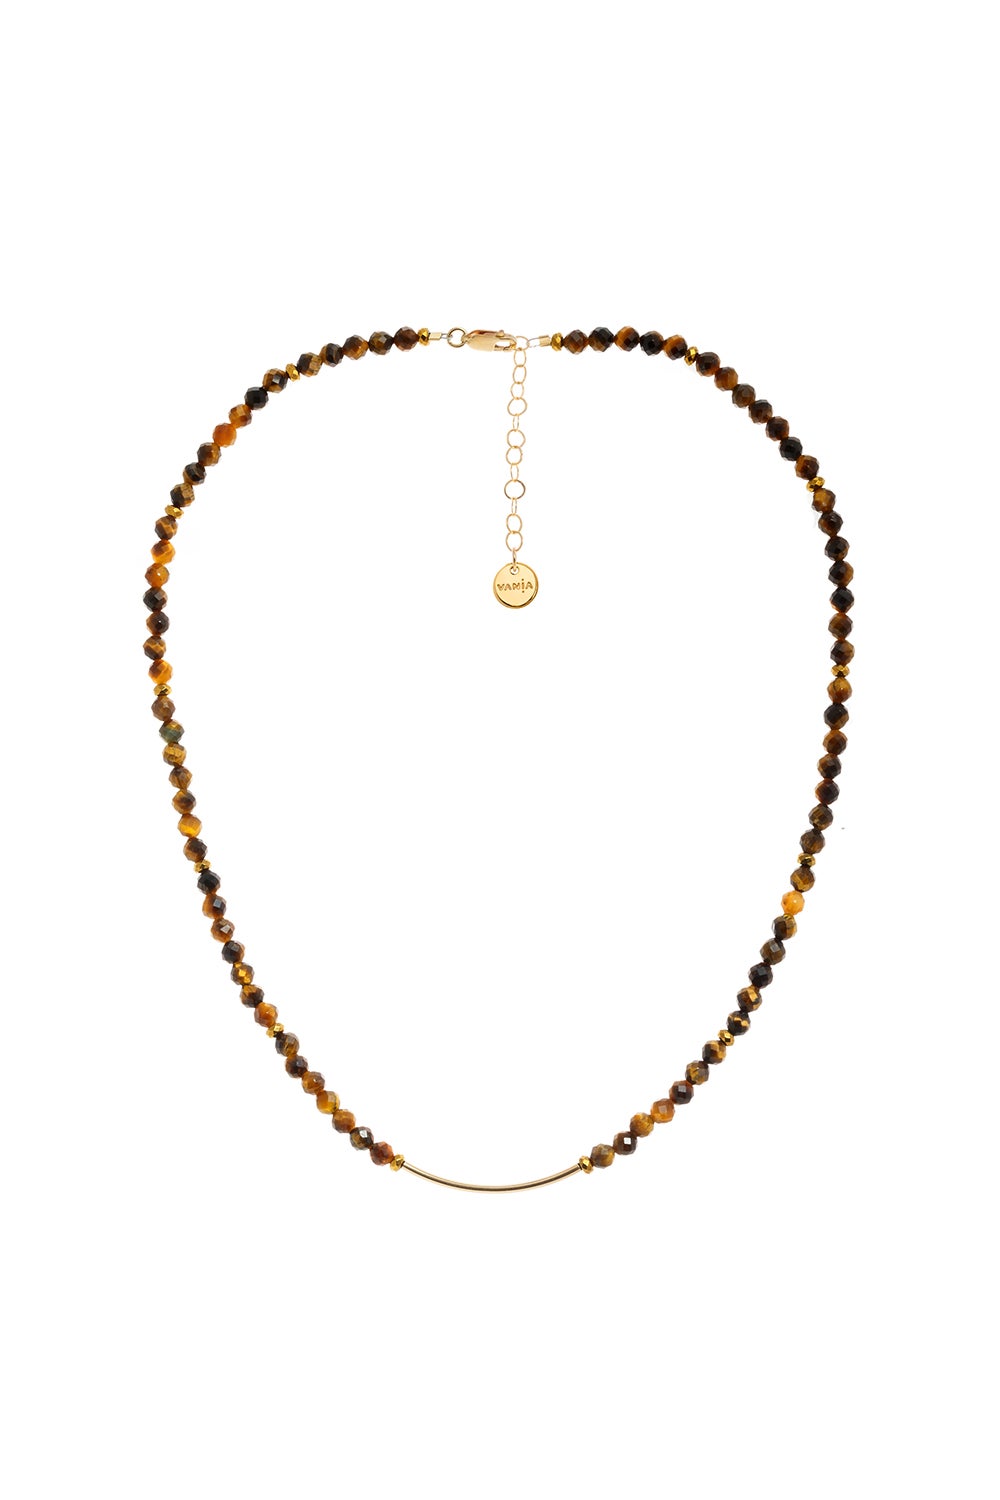 Grayson Herringbone Gold Multi Strand Necklace in Teal Tiger's Eye | Kendra  Scott